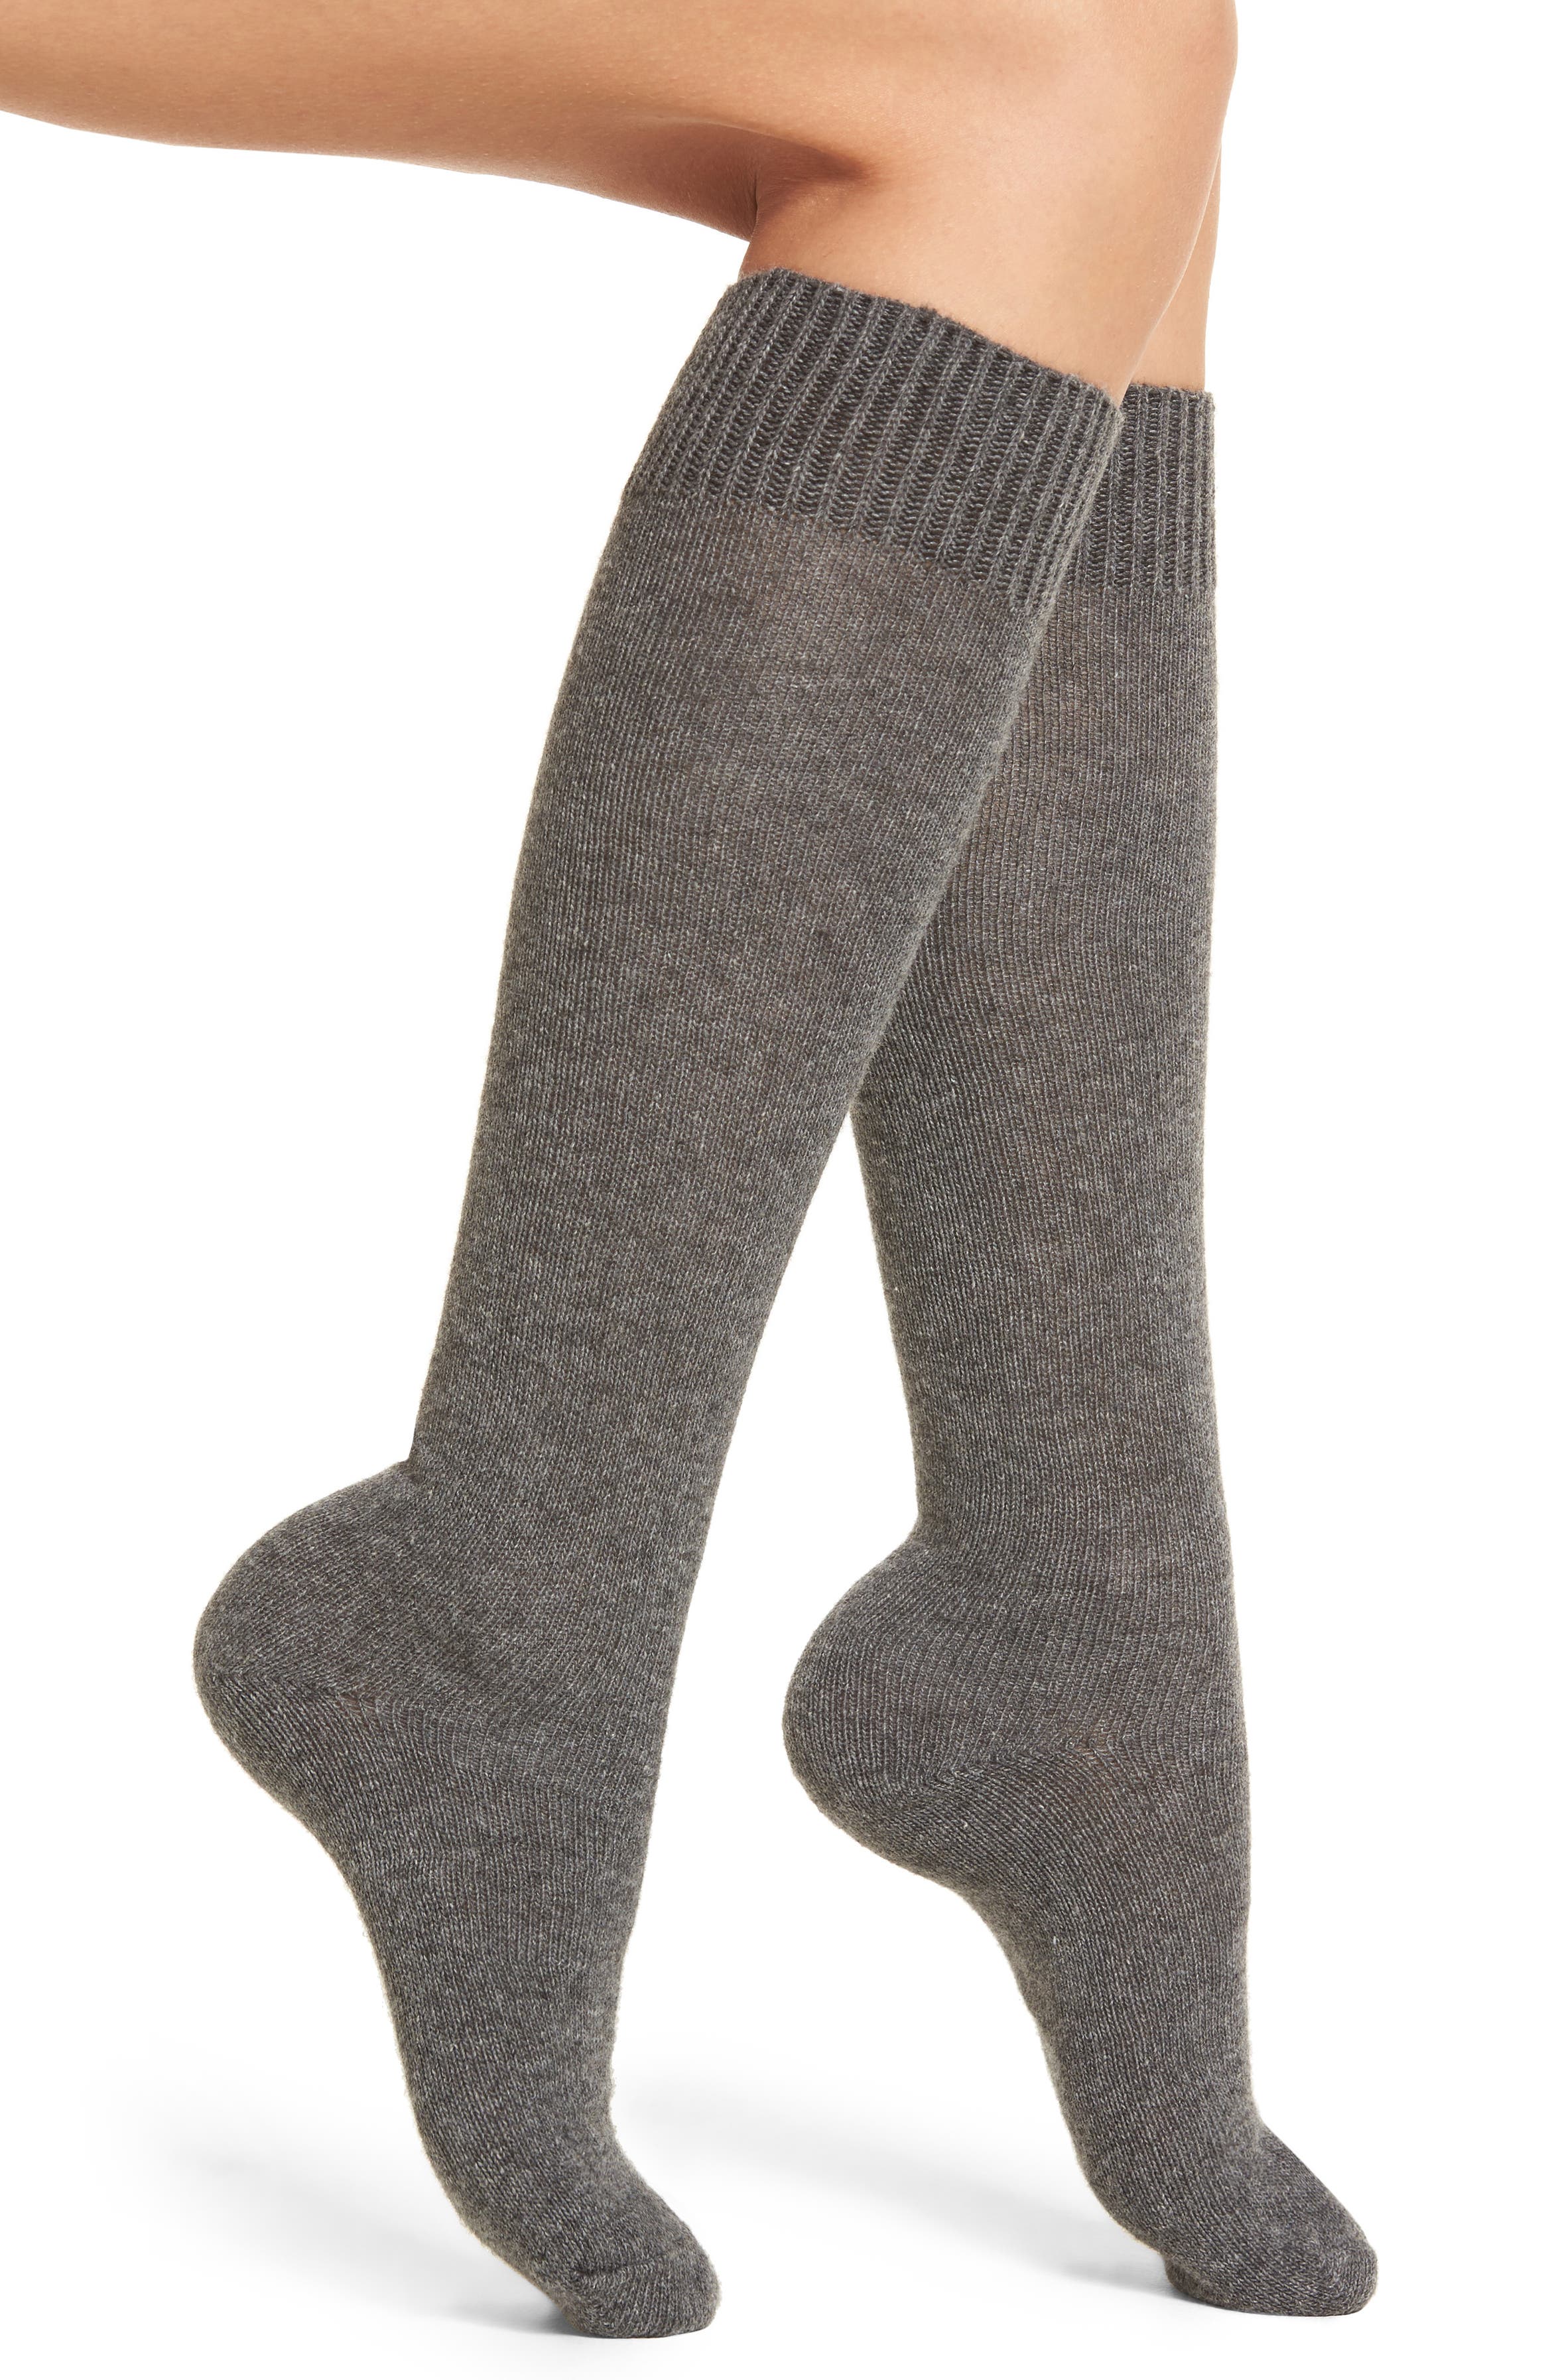 Nordstrom Knee High Socks | Nordstrom